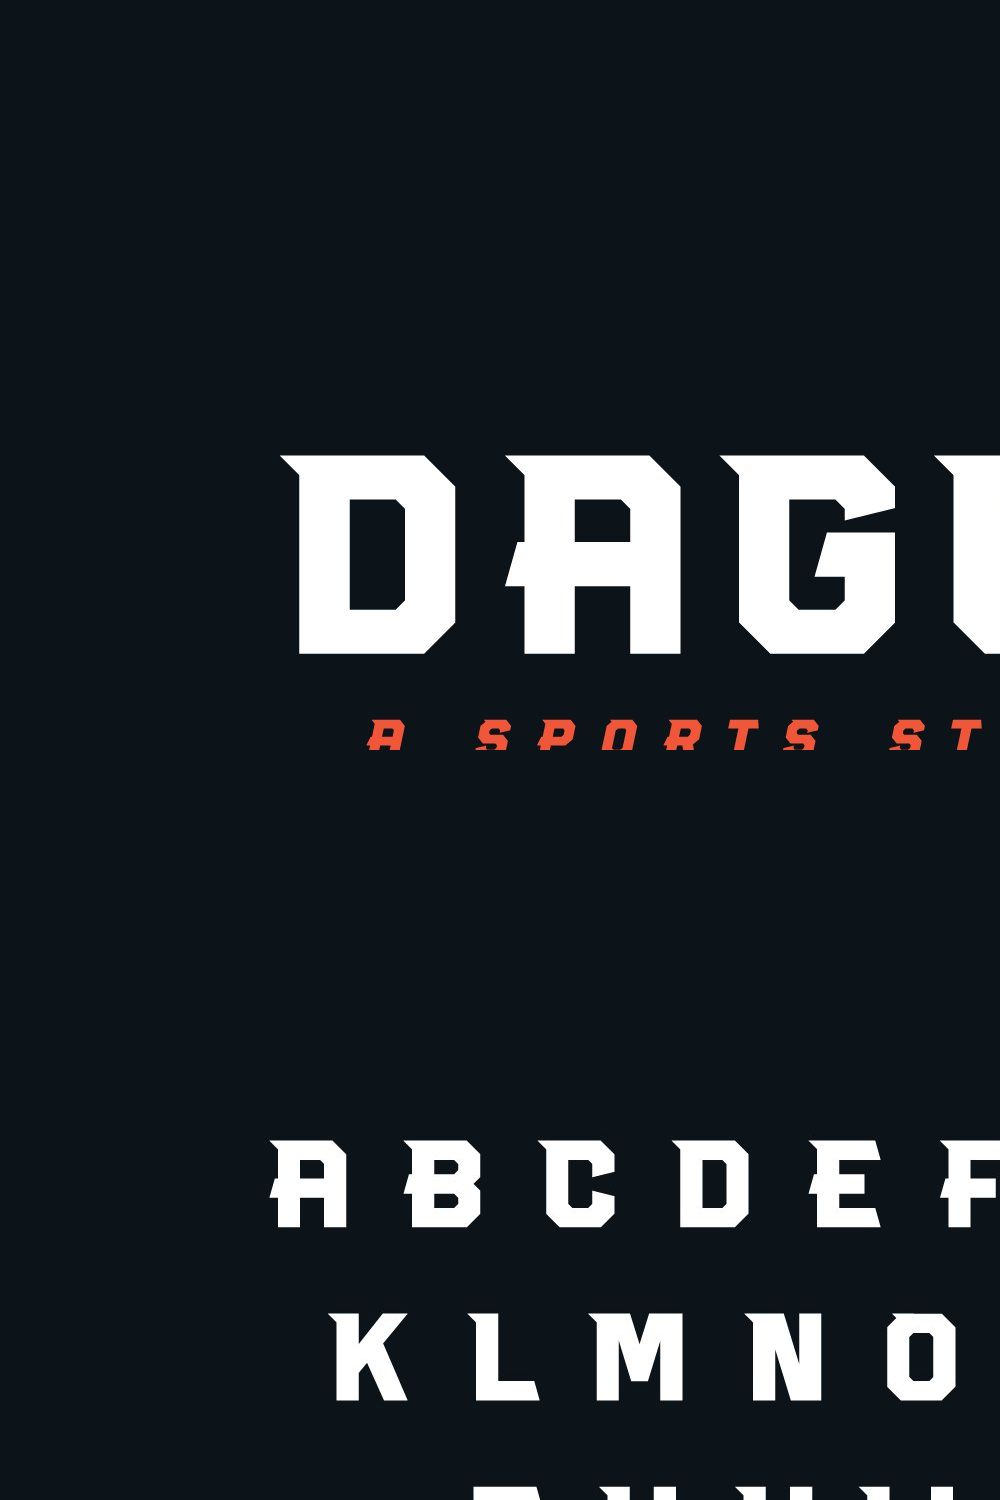 Dagger pinterest preview image.